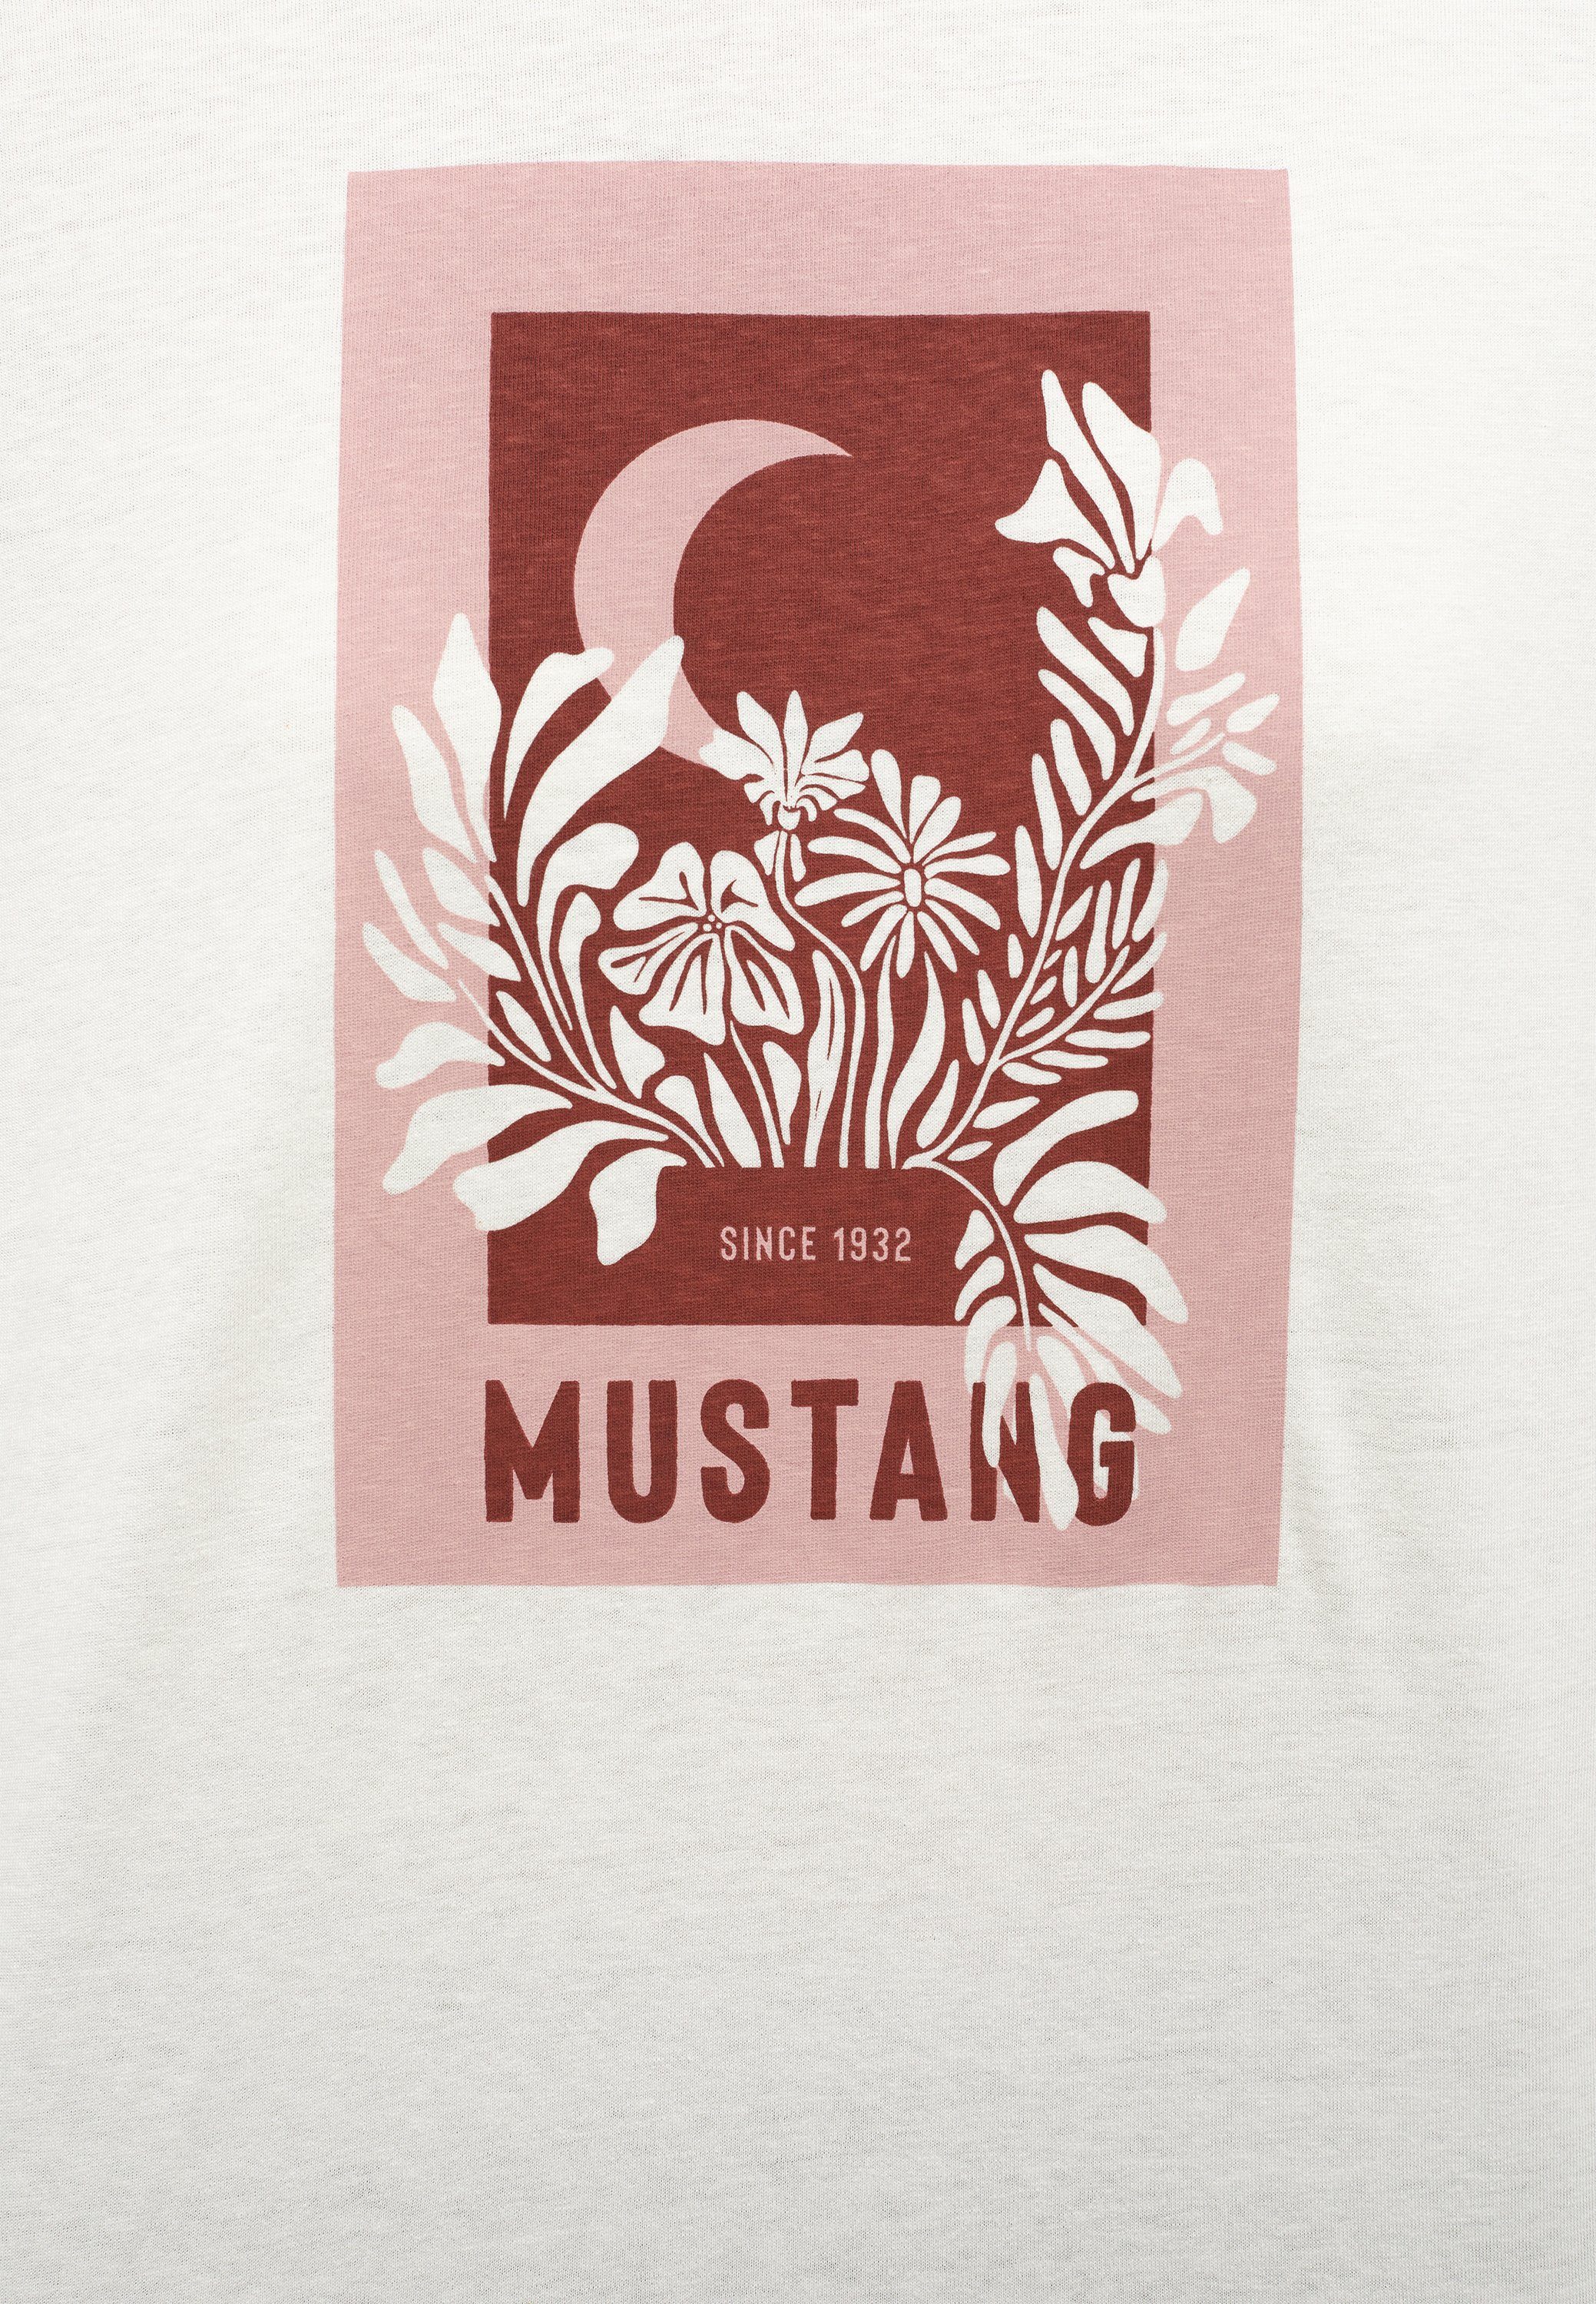 MUSTANG Kurzarmshirt Mustang T-Shirt Print-Shirt offwhite